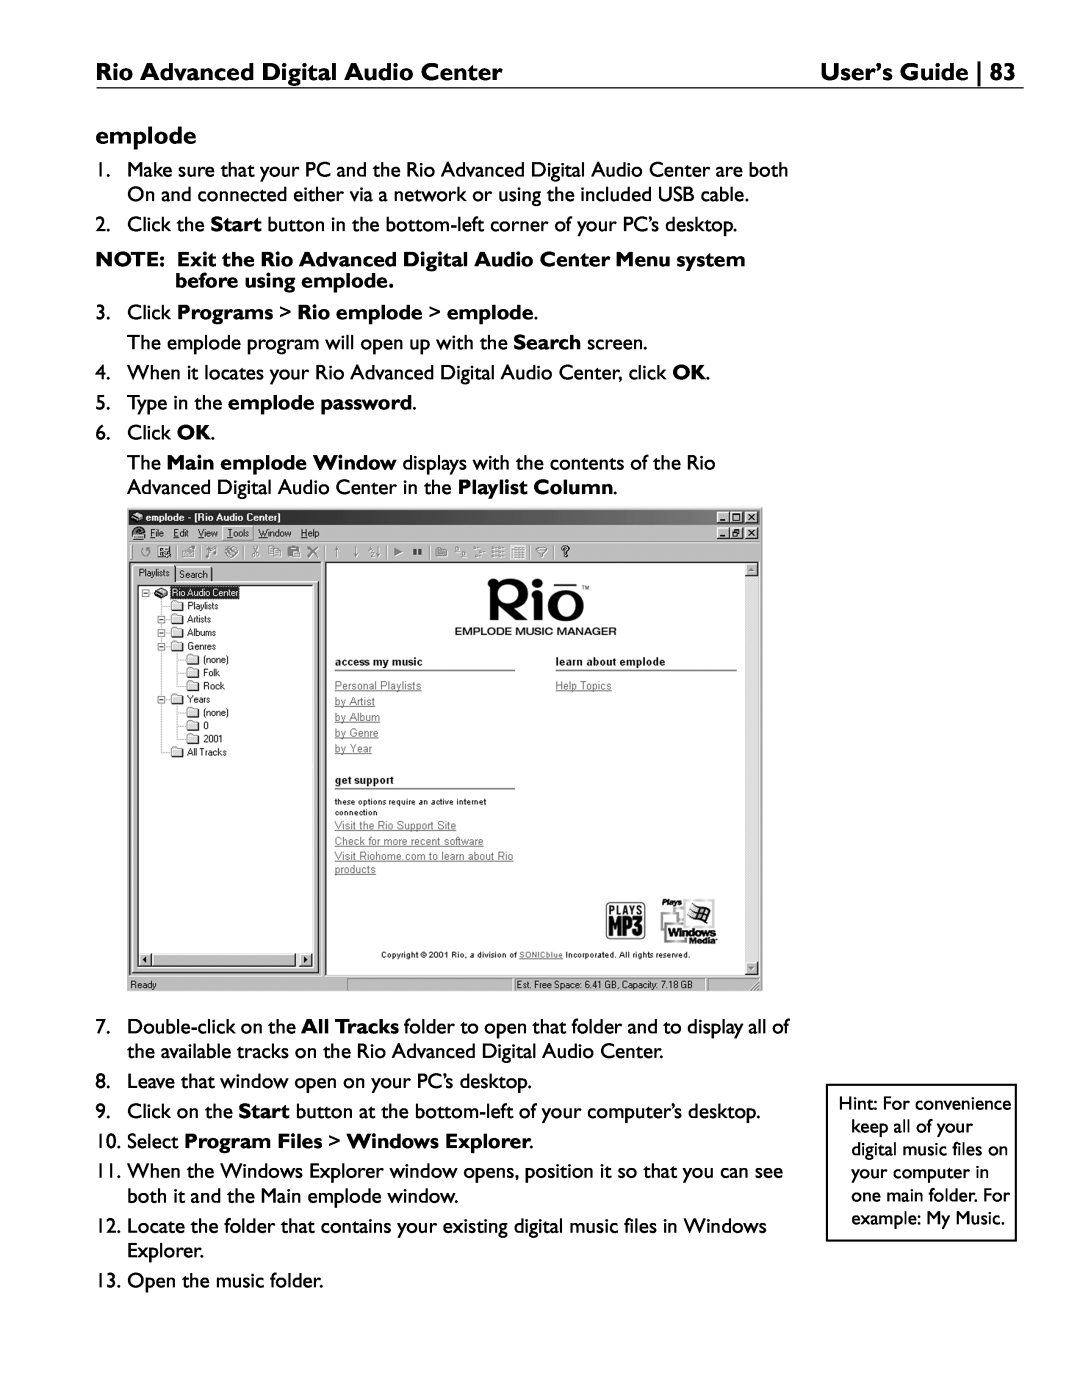 Rio Audio manual Rio Advanced Digital Audio Center, User’s Guide, Click Programs > Rio emplode > emplode 